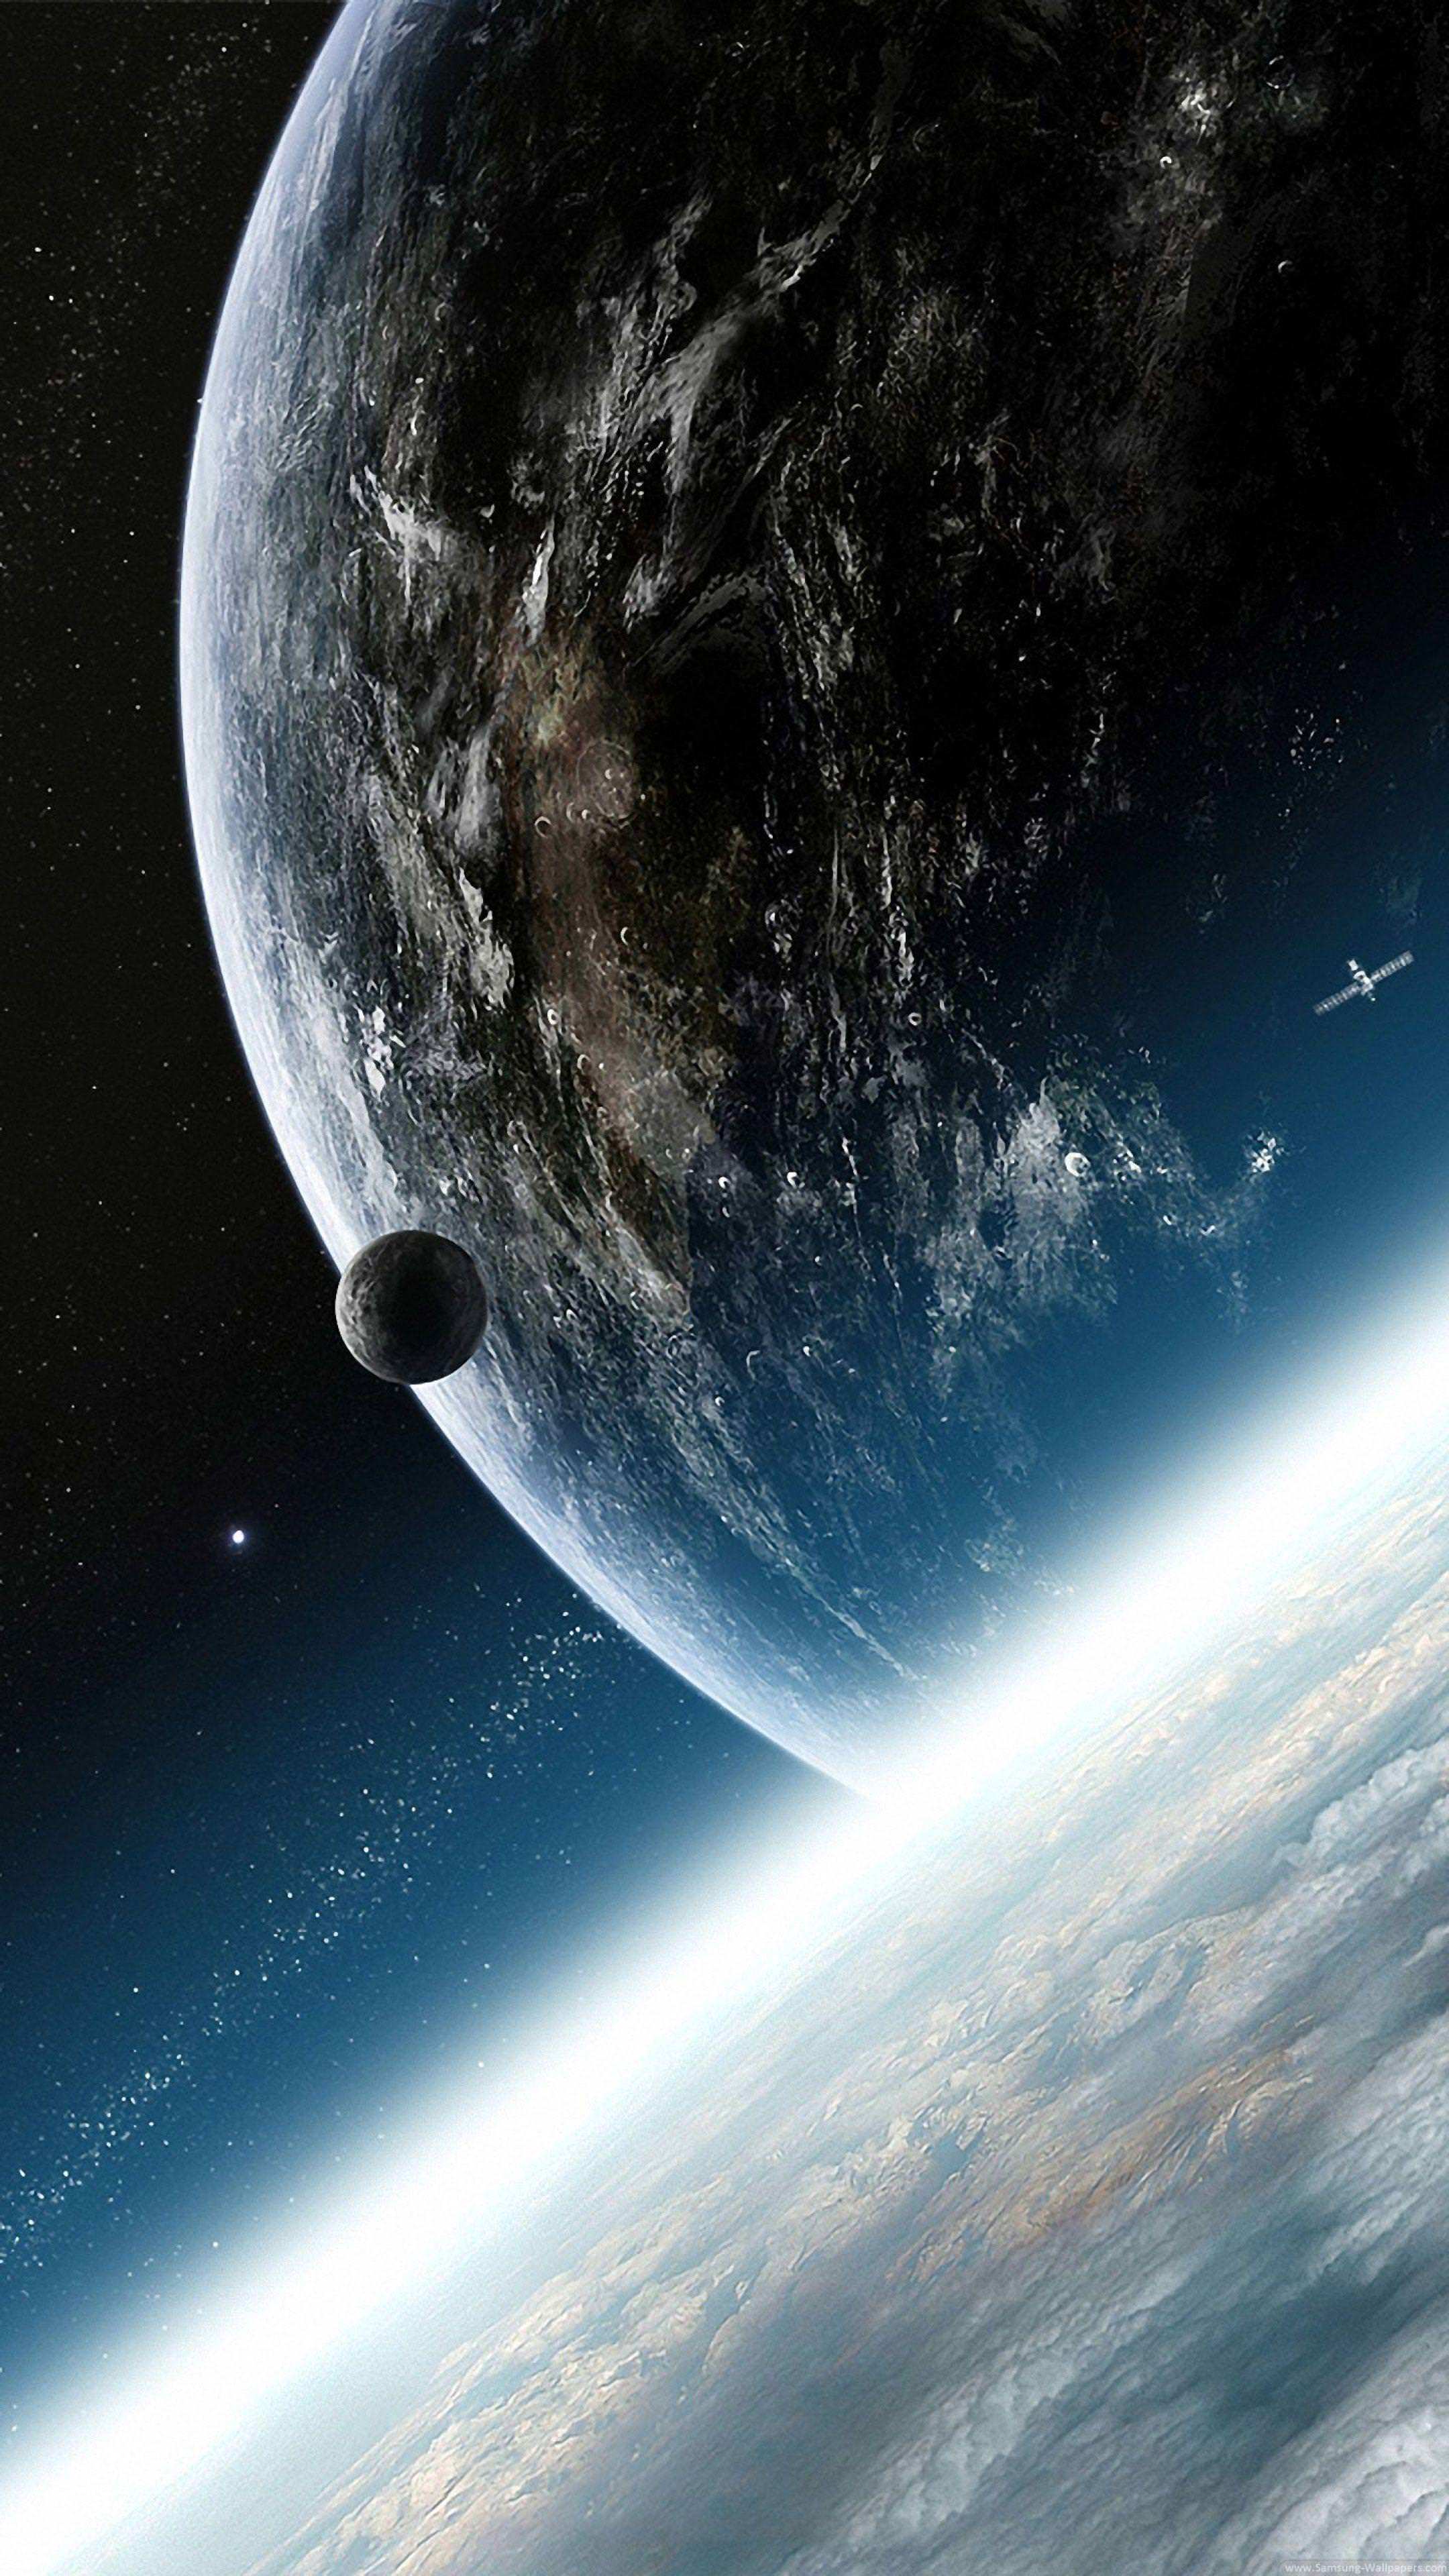 universo fondo de pantalla,espacio exterior,atmósfera,planeta,objeto astronómico,espacio